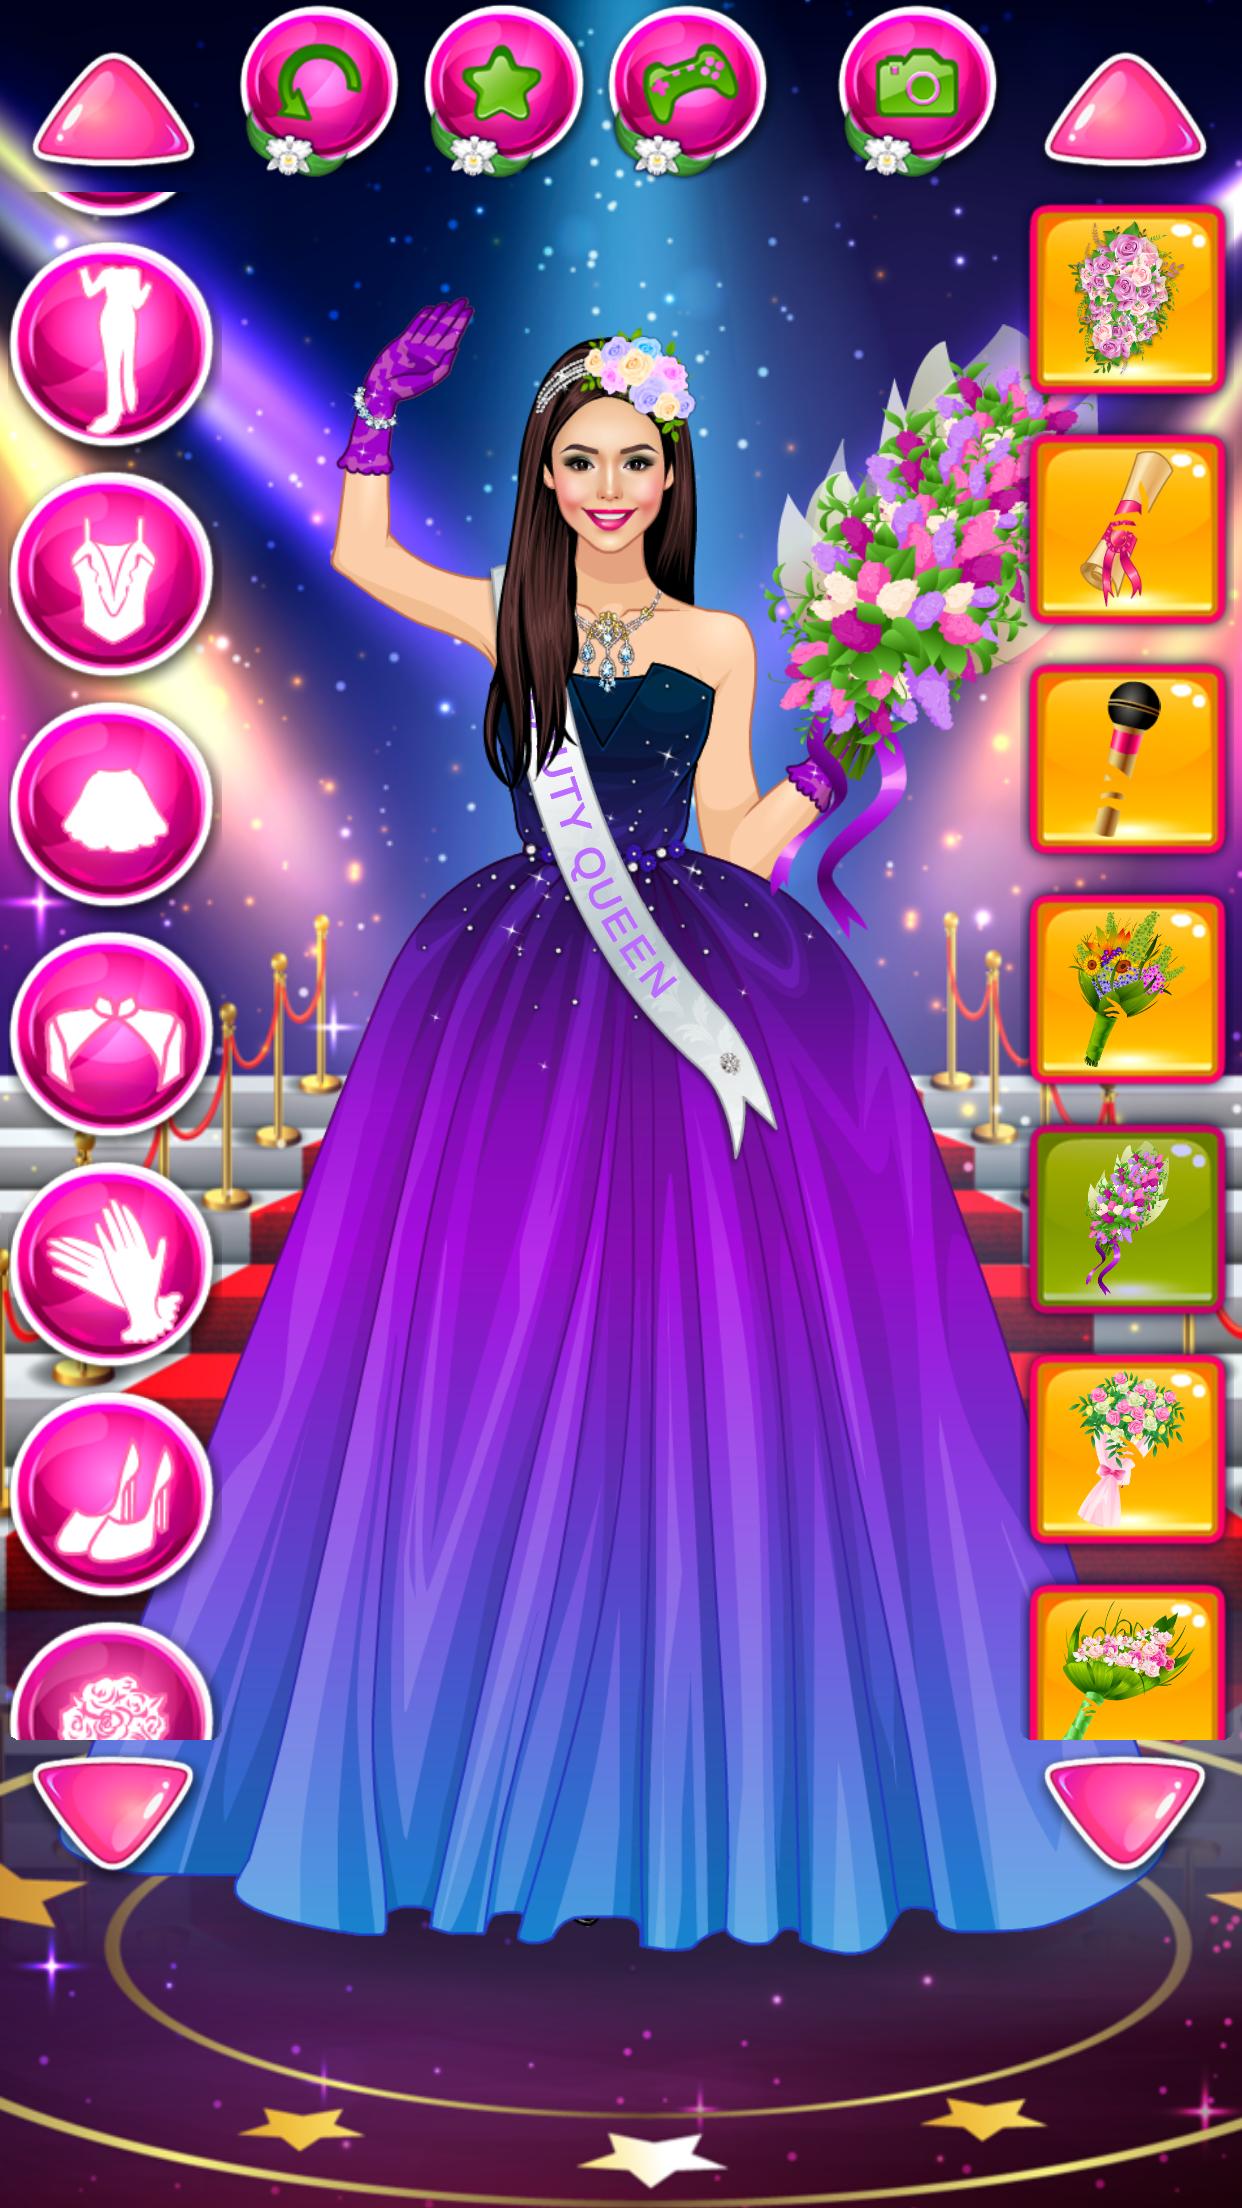 Beauty Queen Dress Up - Star Girl Fashion 1.1 Screenshot 10